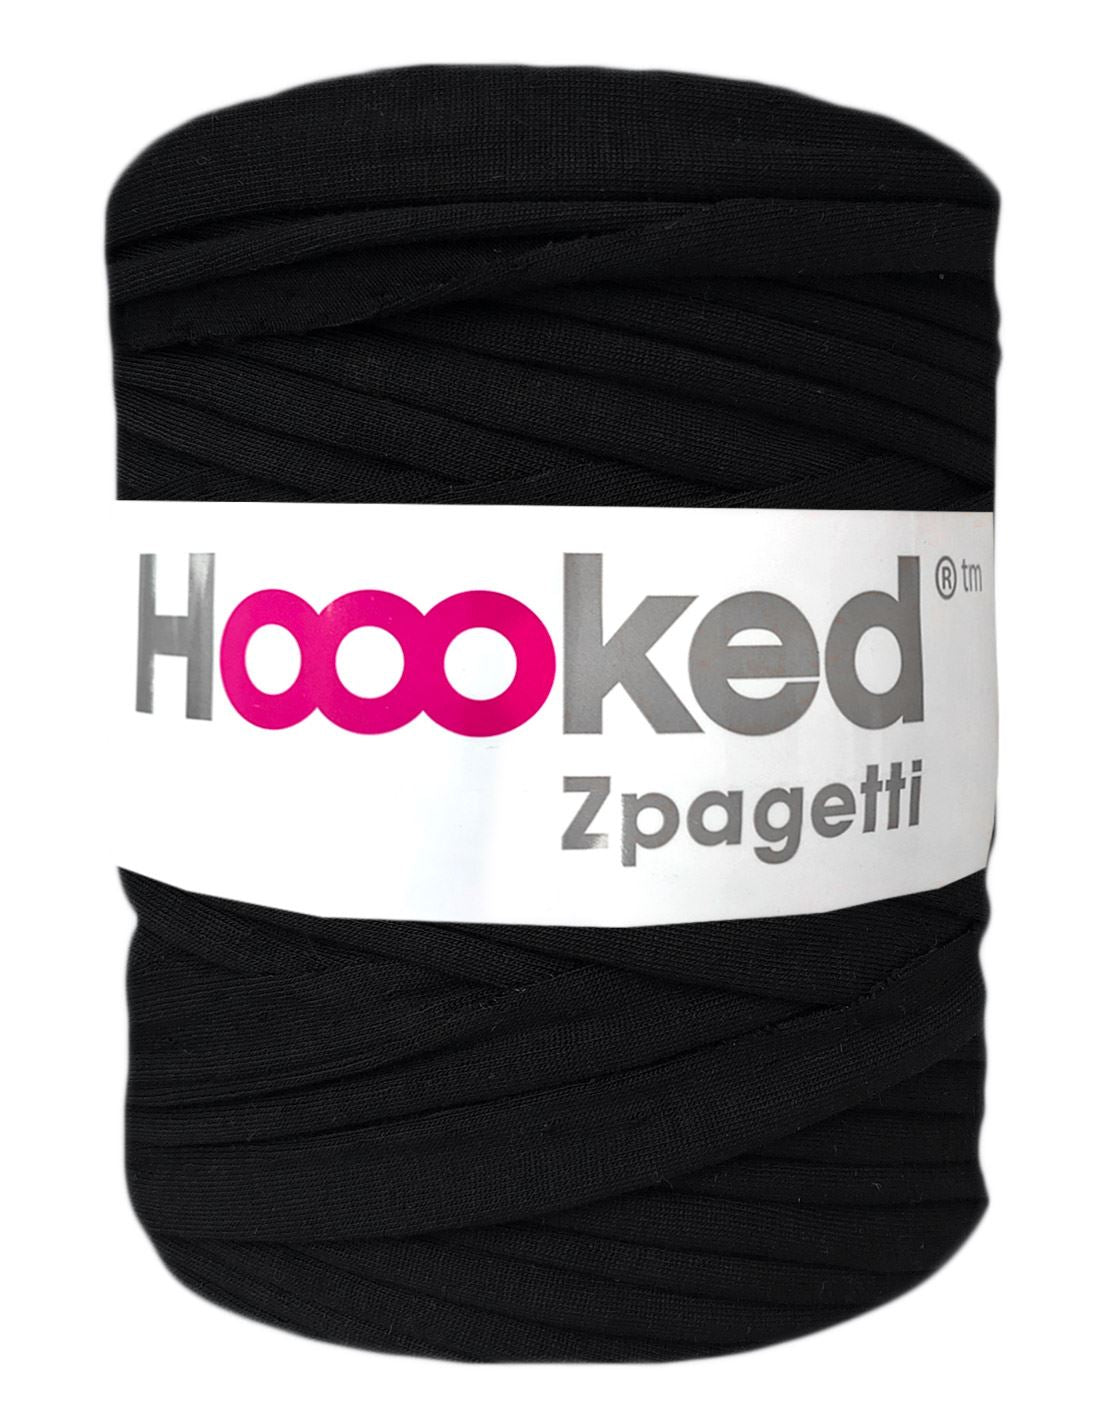 Onyx black t-shirt yarn by Hoooked Zpagetti (100-120m)